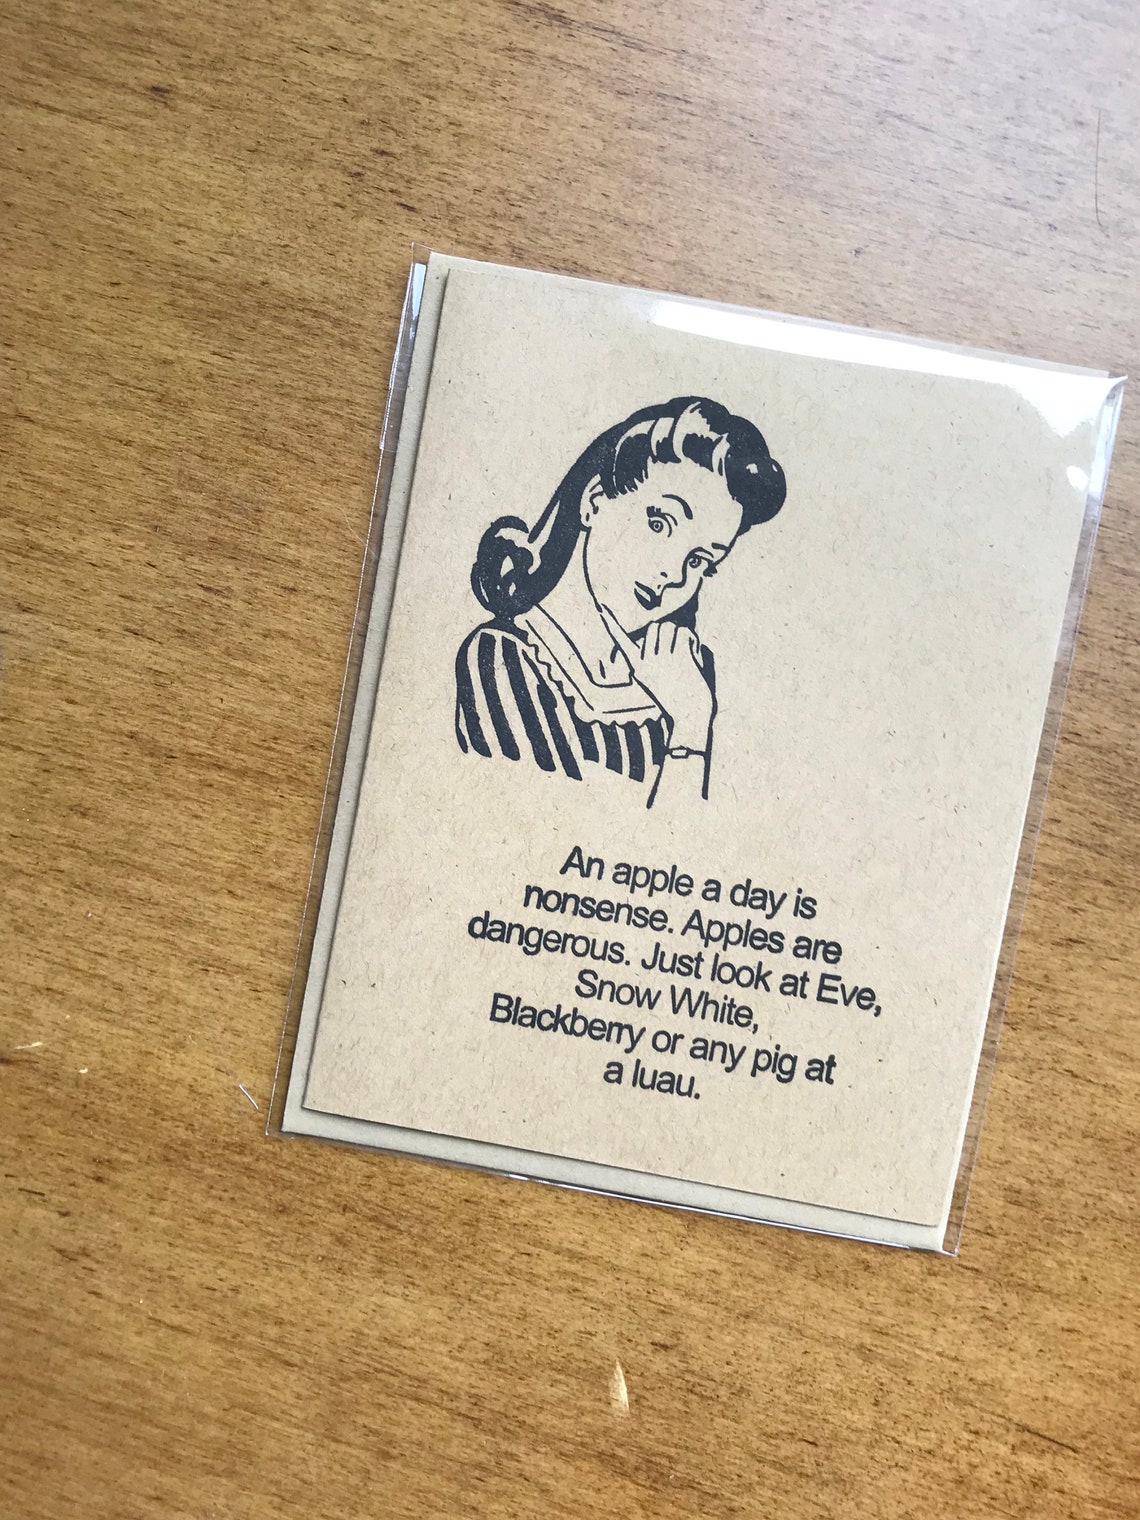 Humorous Funny Notecard Greeting Card Blank Inside Handmade Retro